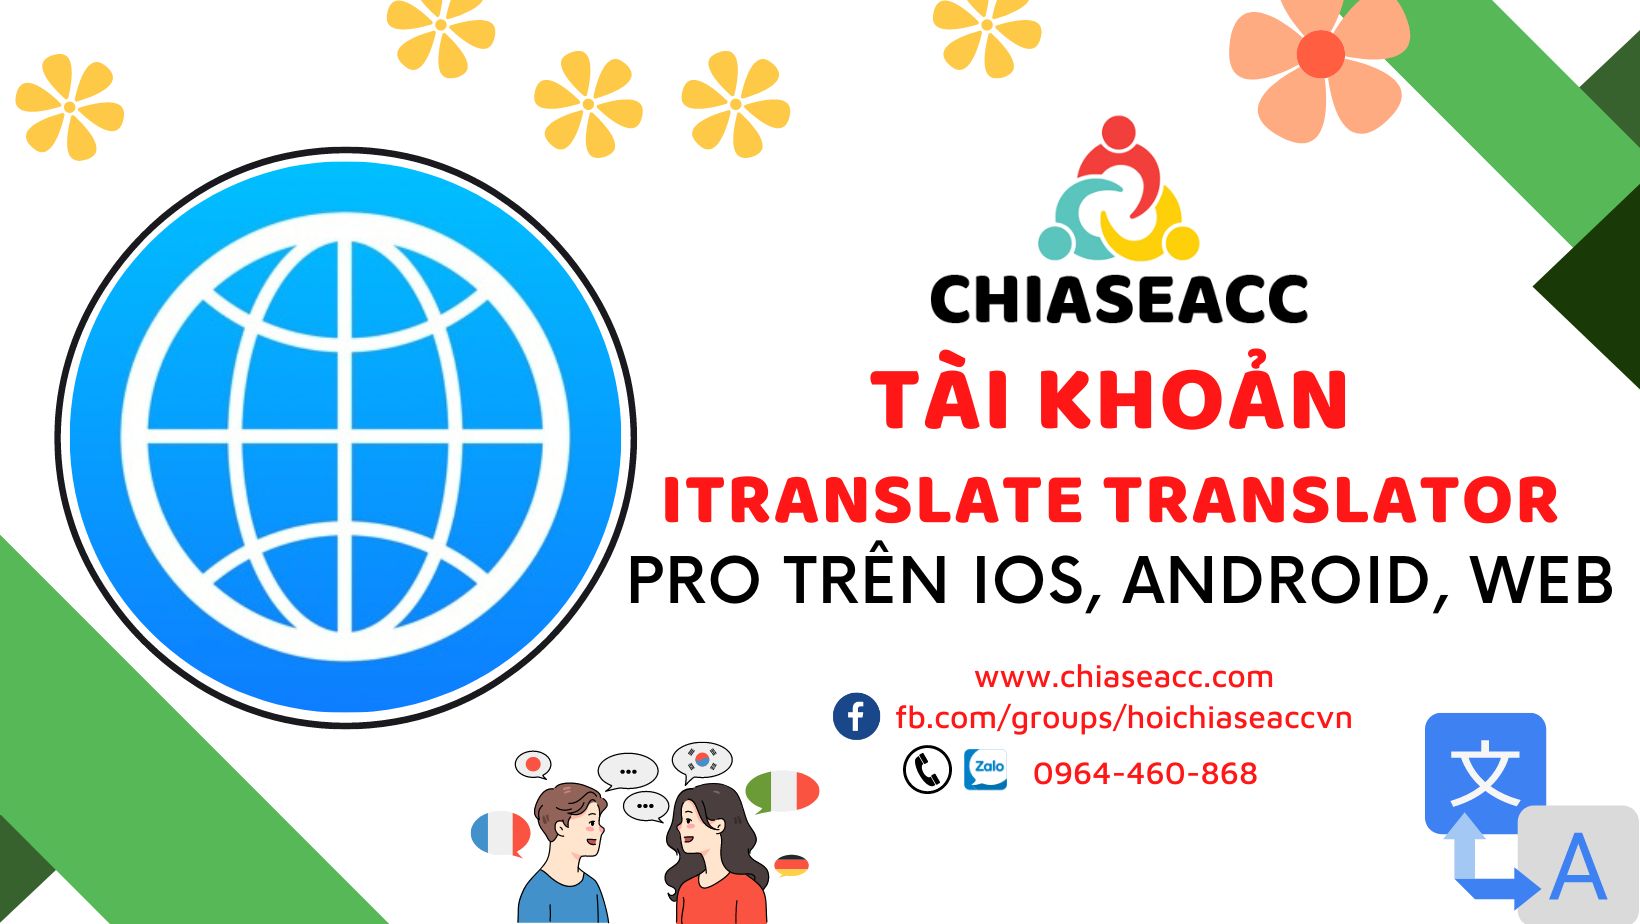 itranslate translator pro tren ios android win macos